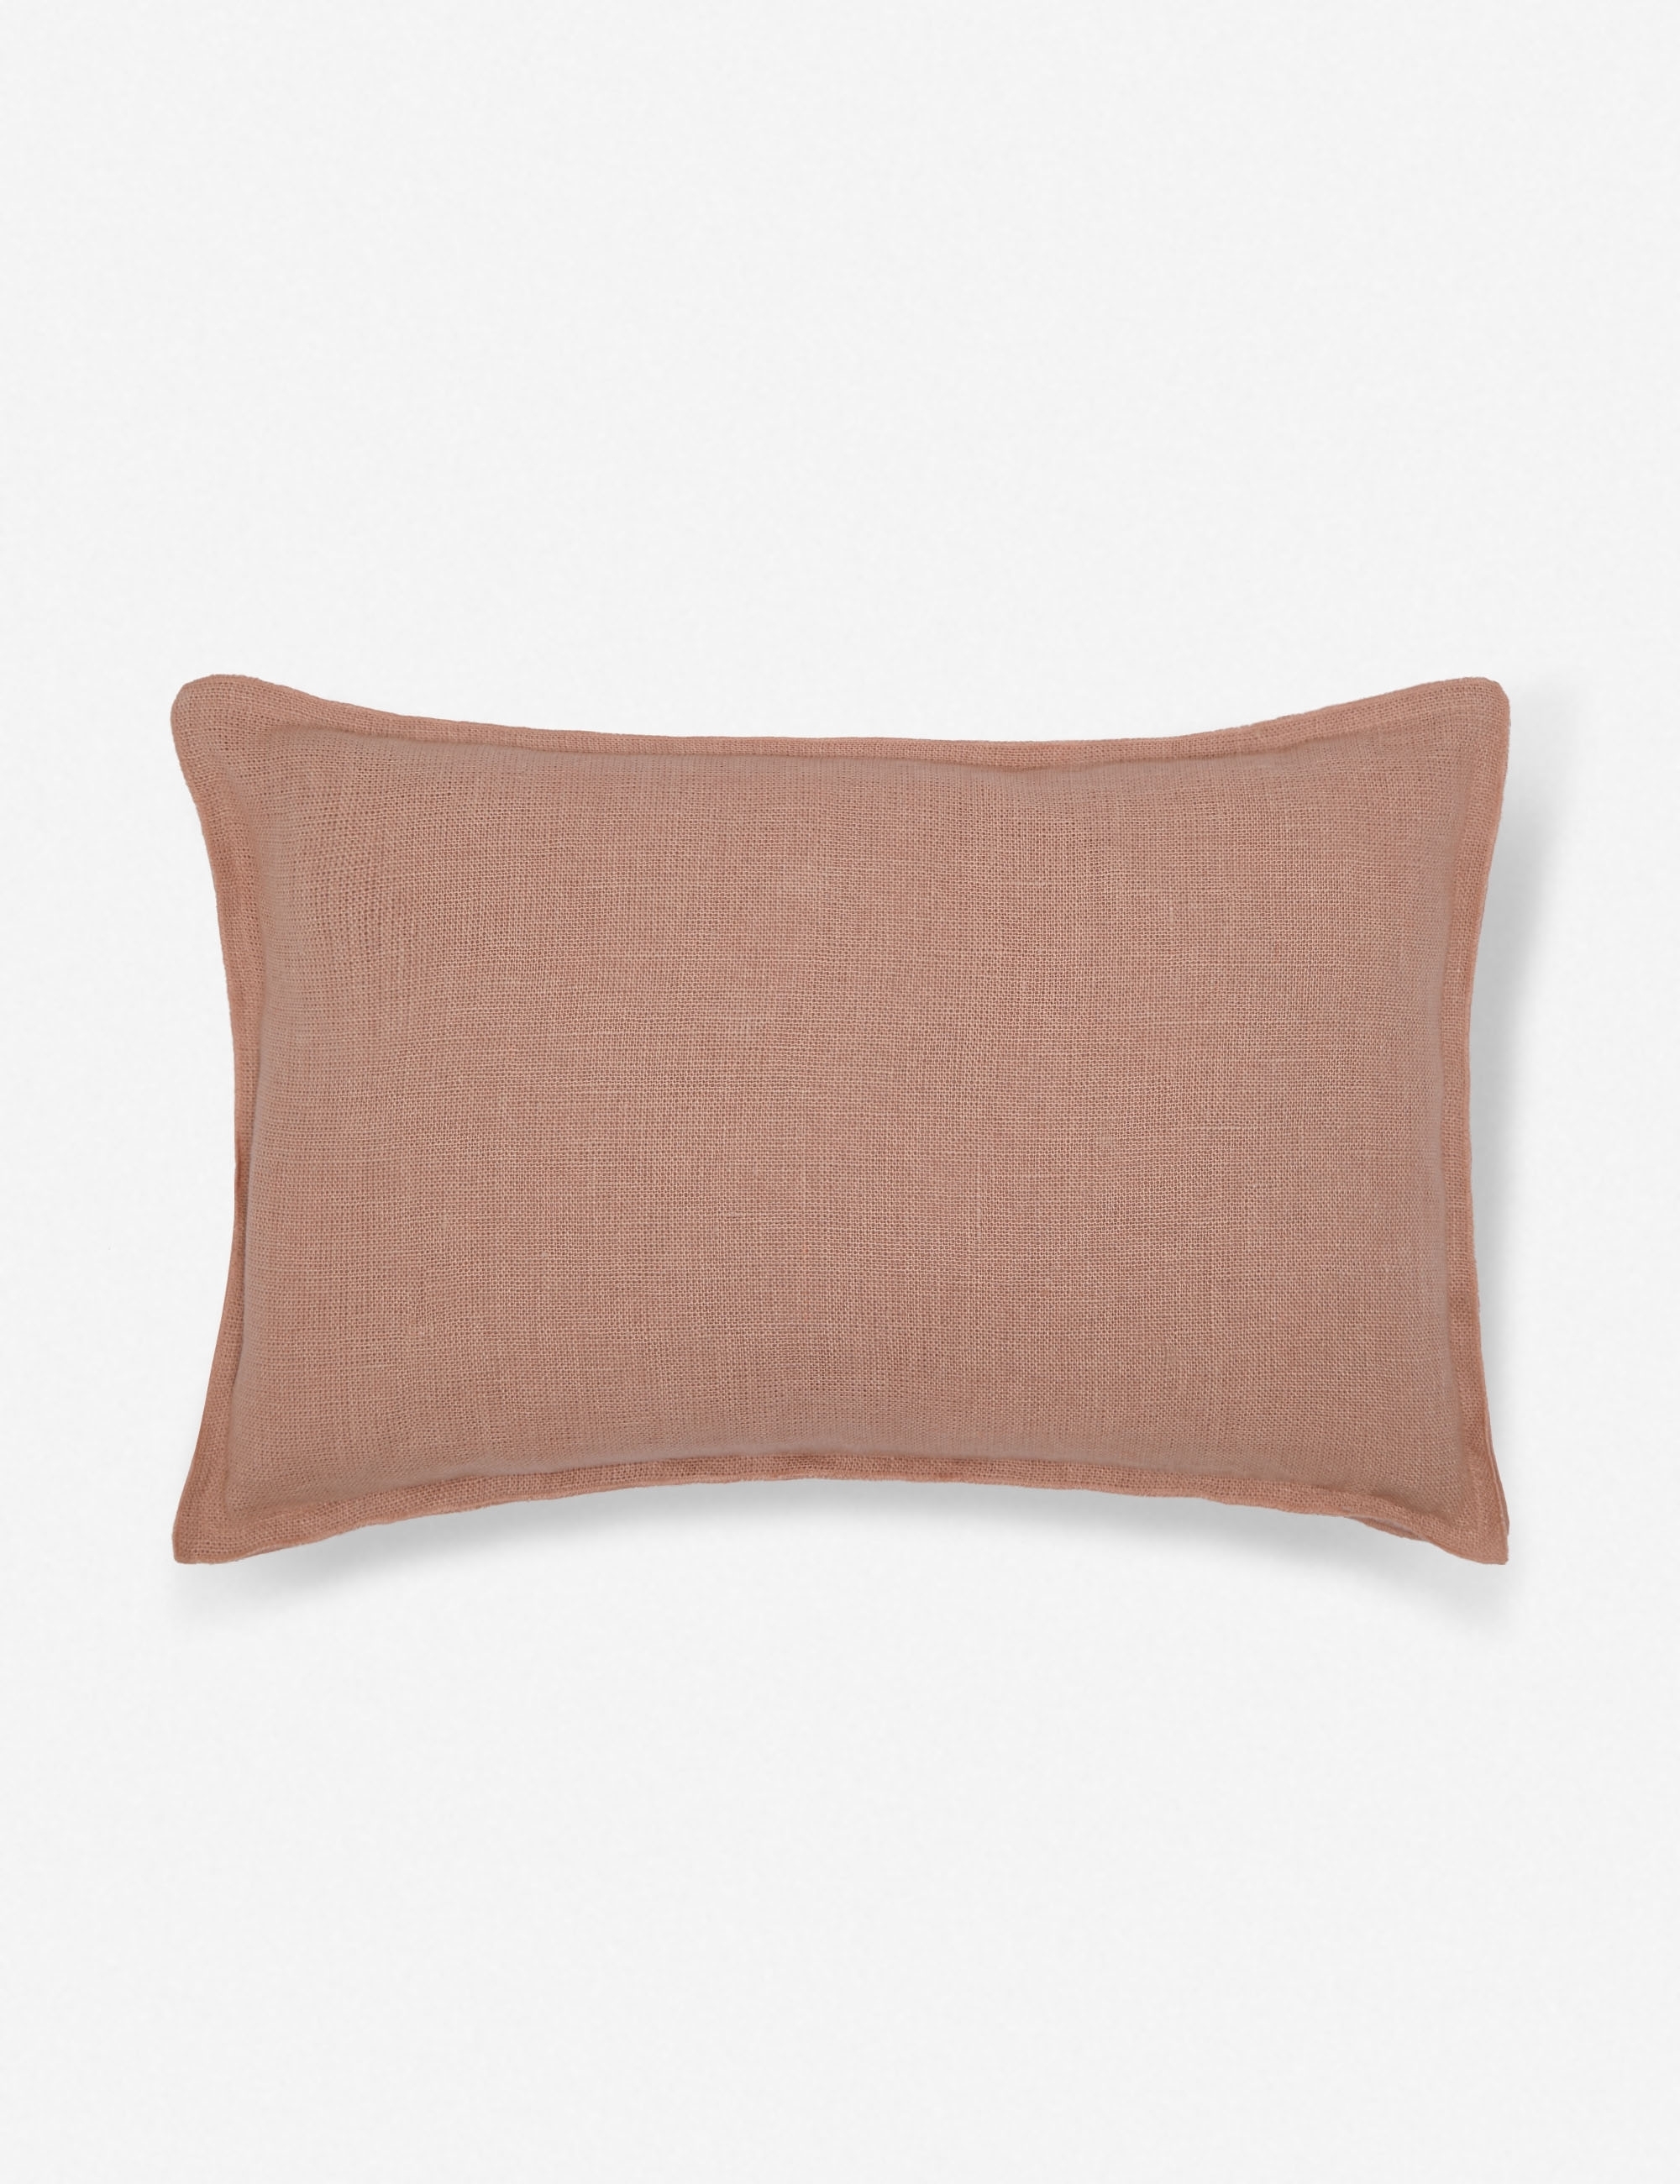 Arlo Linen Lumbar Pillow, Terracotta - Image 0